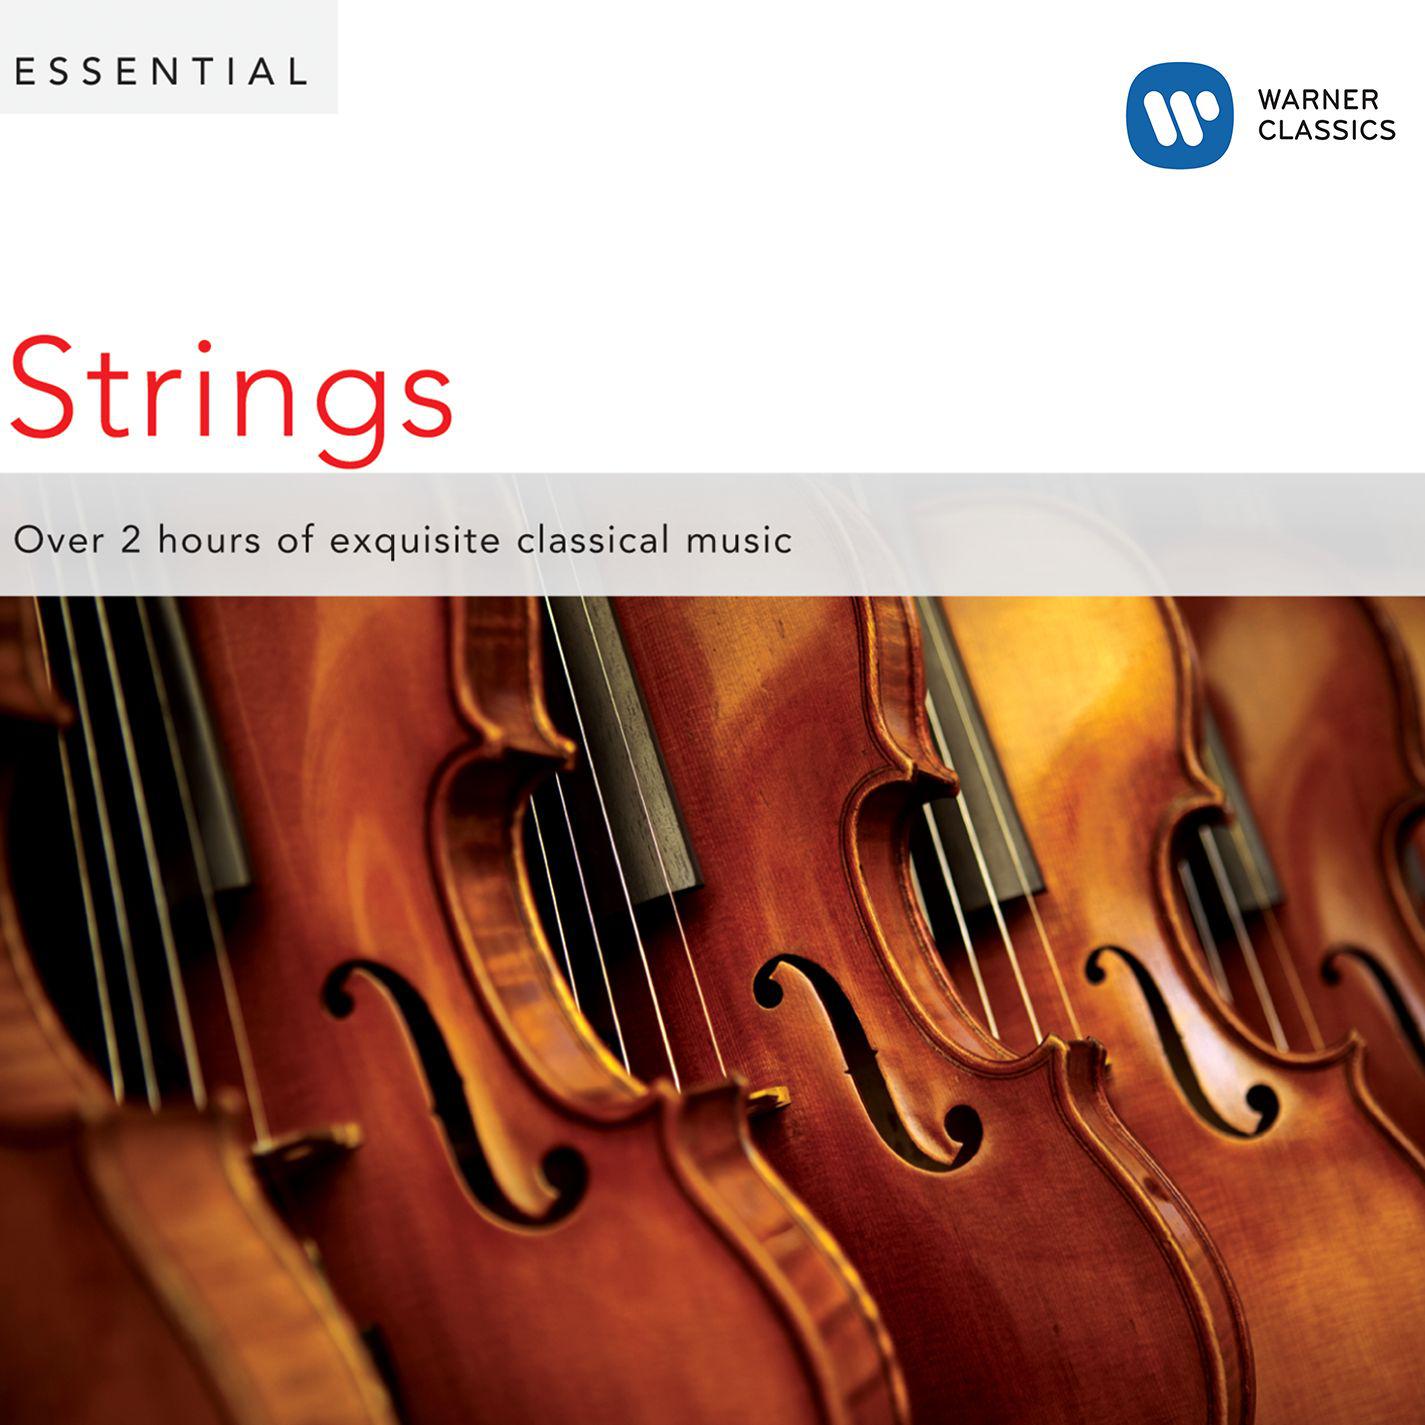 String Quintet in E Major, G. 282, Op. 13 No. 6: III. Minuetto - Trio